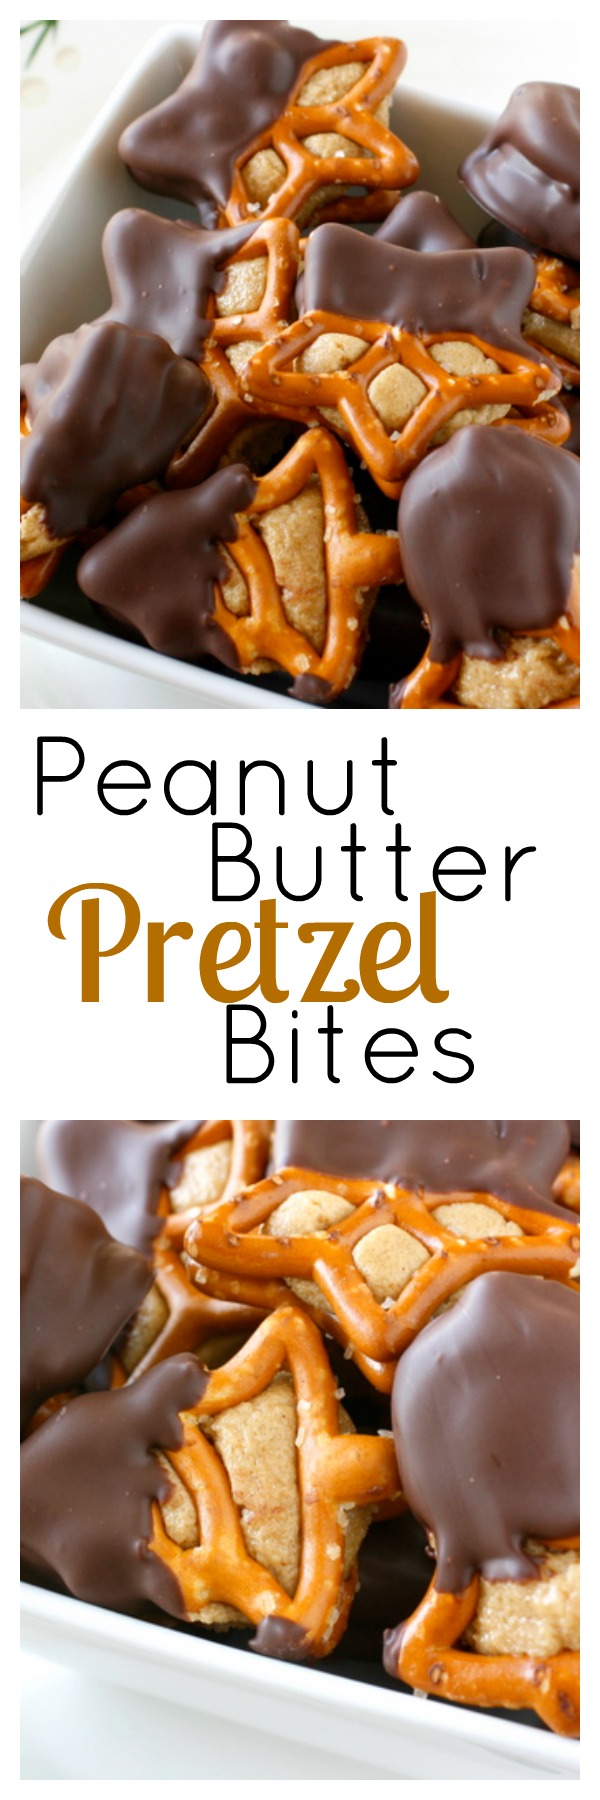 Peanut Butter Pretzel Bites